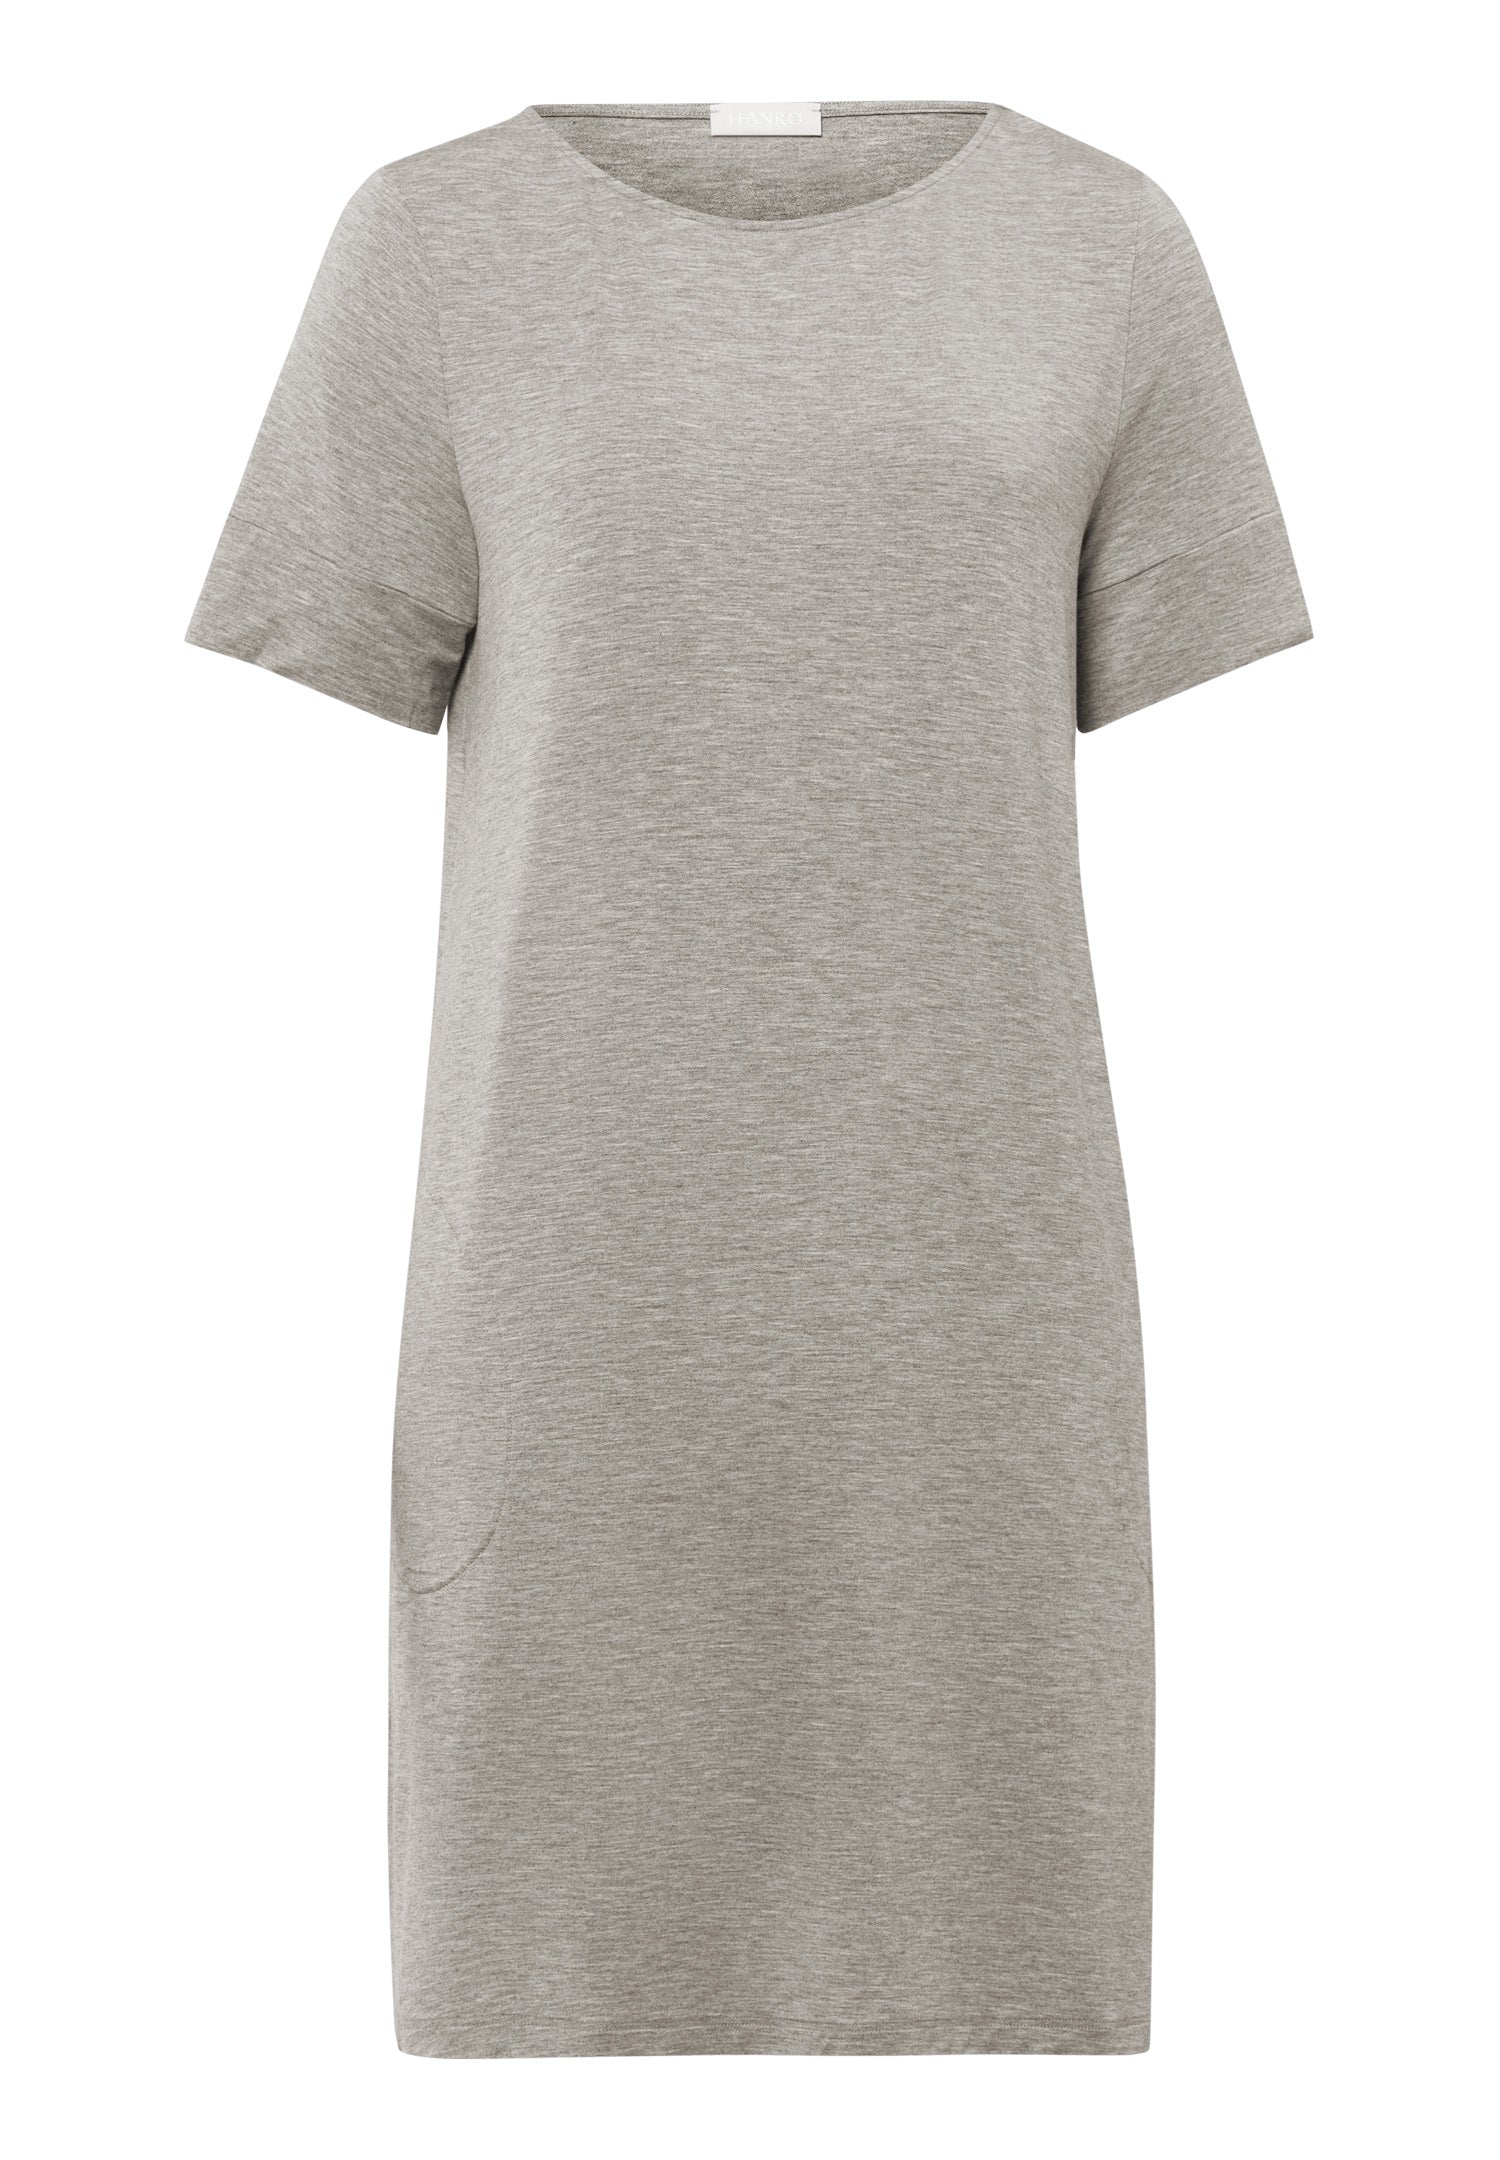 74949 Natural Elegance Short Sleeve Nightdress 90cm - 958 Grey Melange